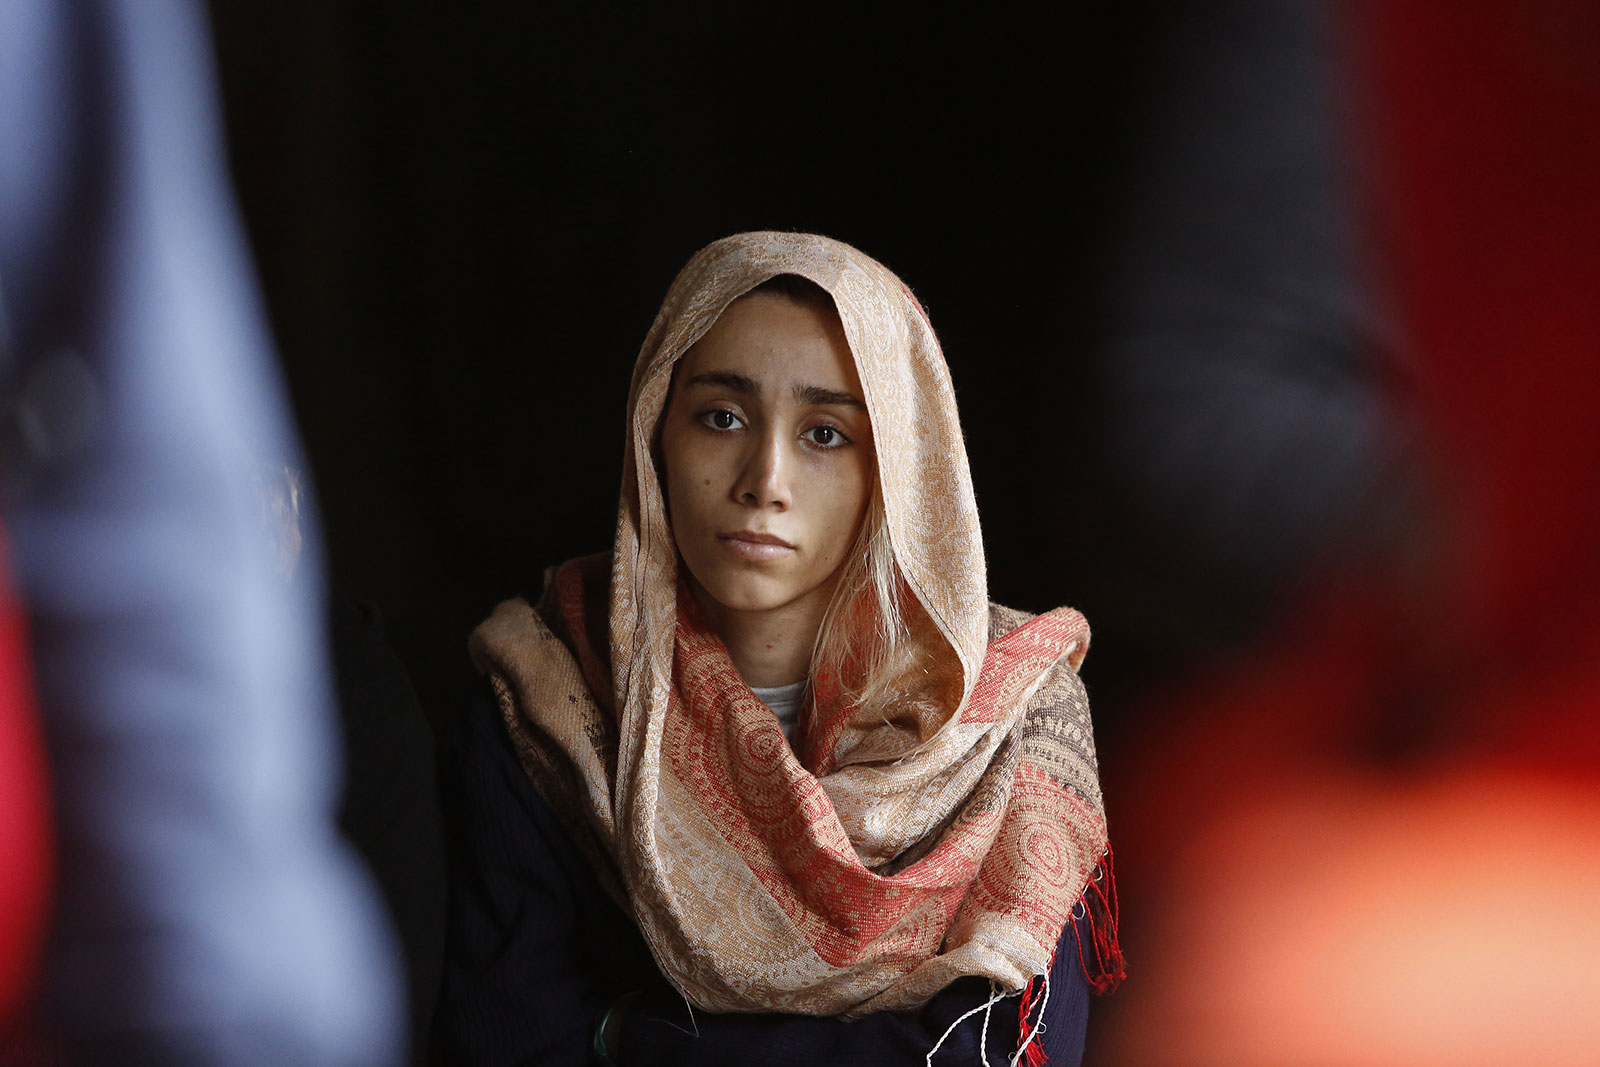 An Afghan woman stuck in the northwestern Bosnian town of Bihac on her way to western Europe.